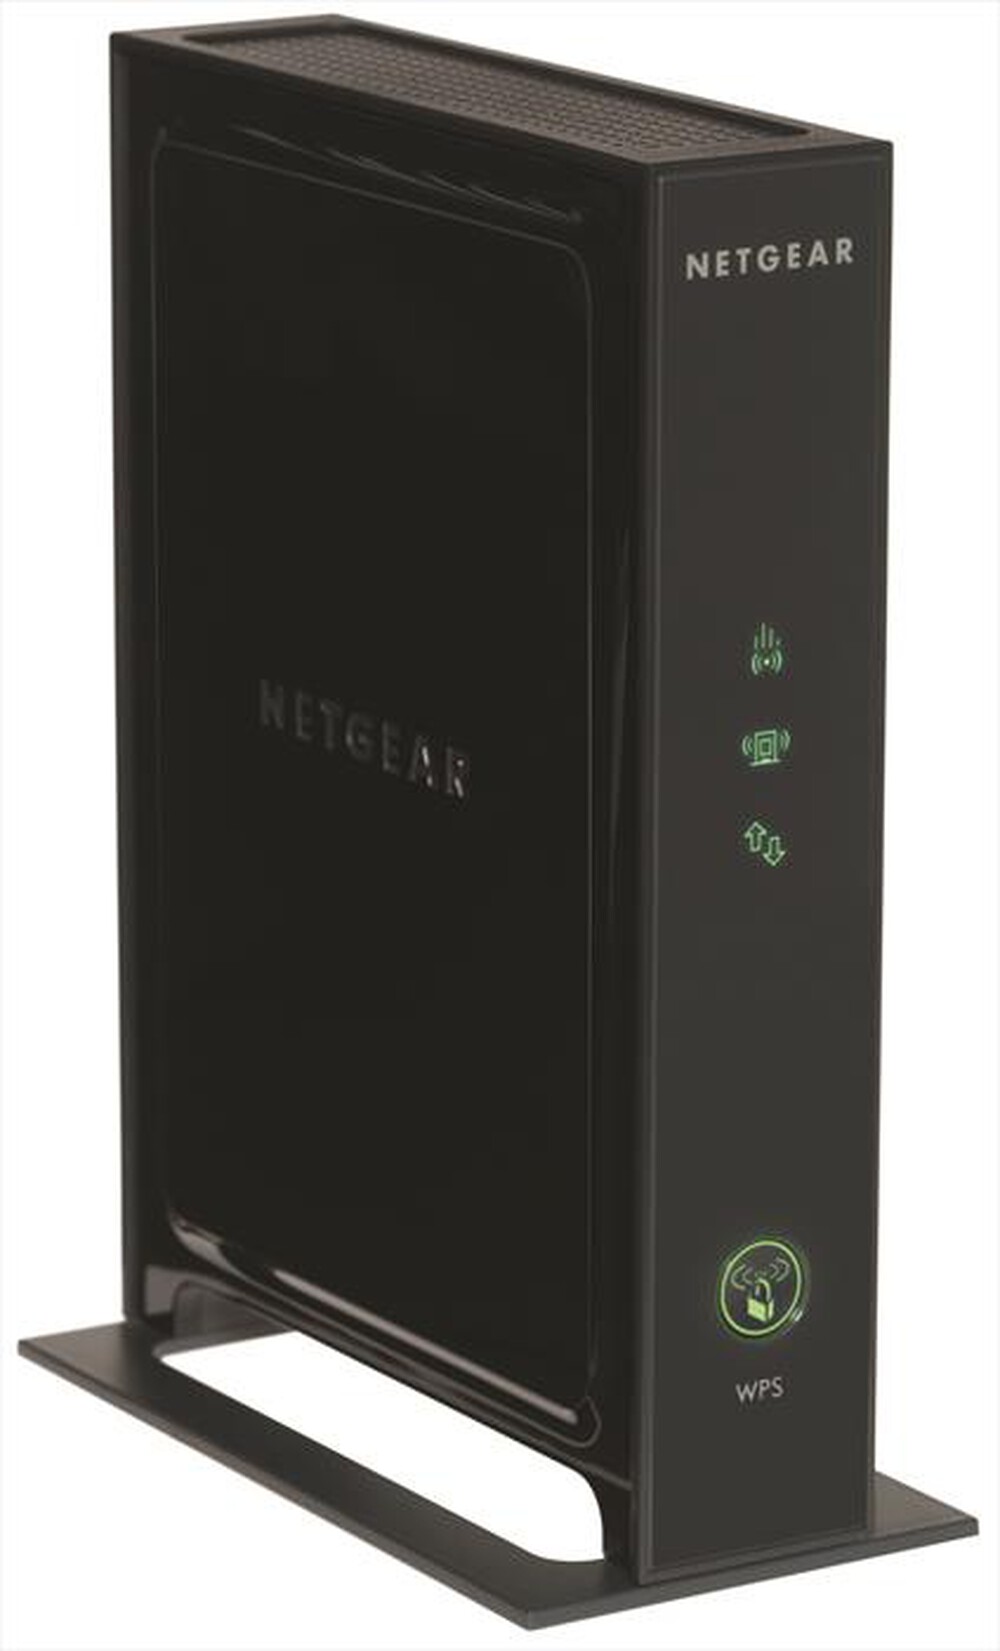 "NETGEAR - WNR2000 N300 Router Wi-Fi"